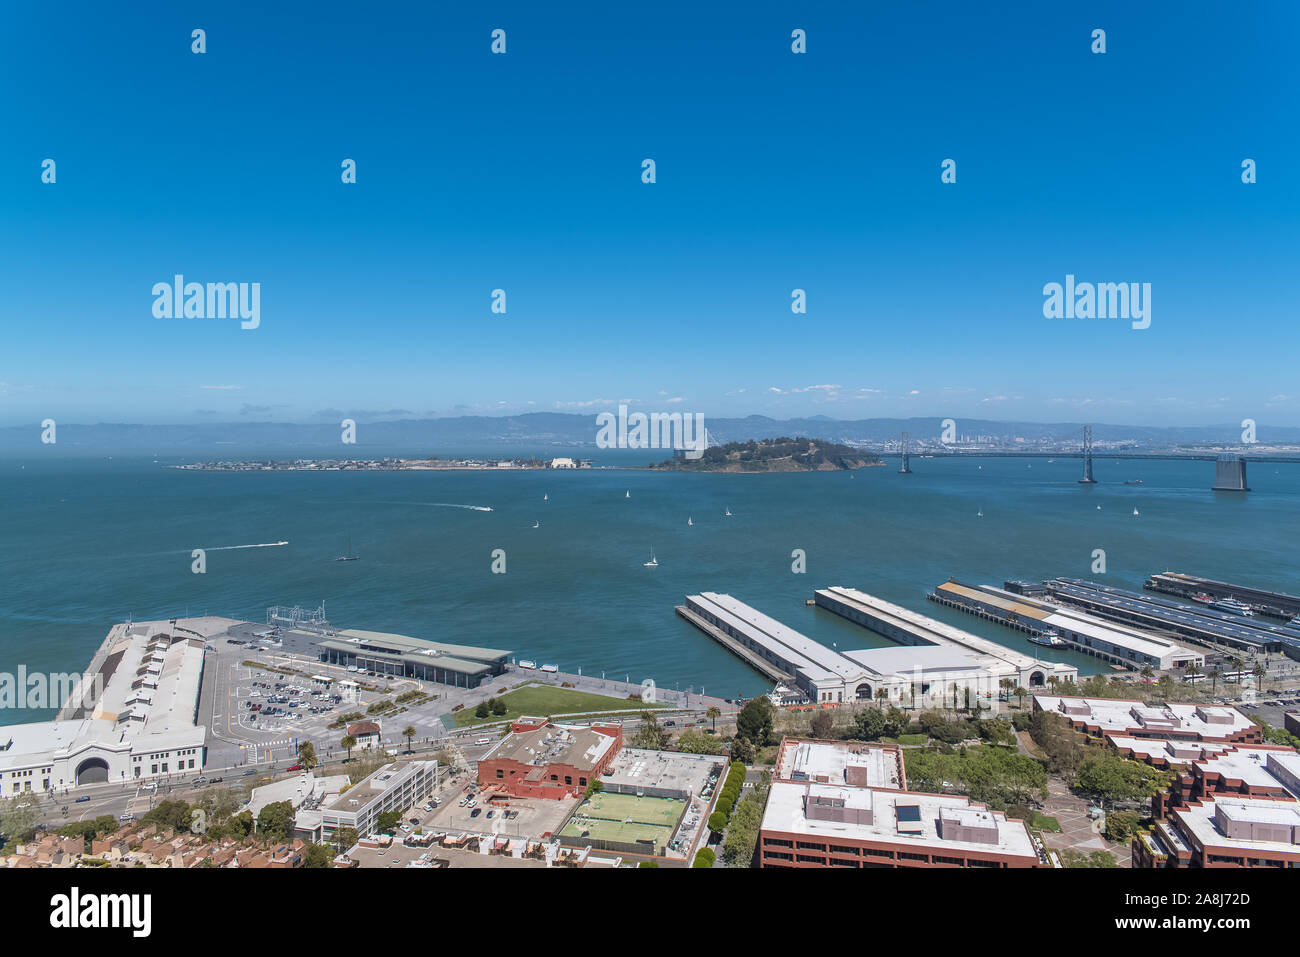 San Francisco in California, the Alcatraz island in the beautiful bay, and the Pier 39 with the marina Stock Photo